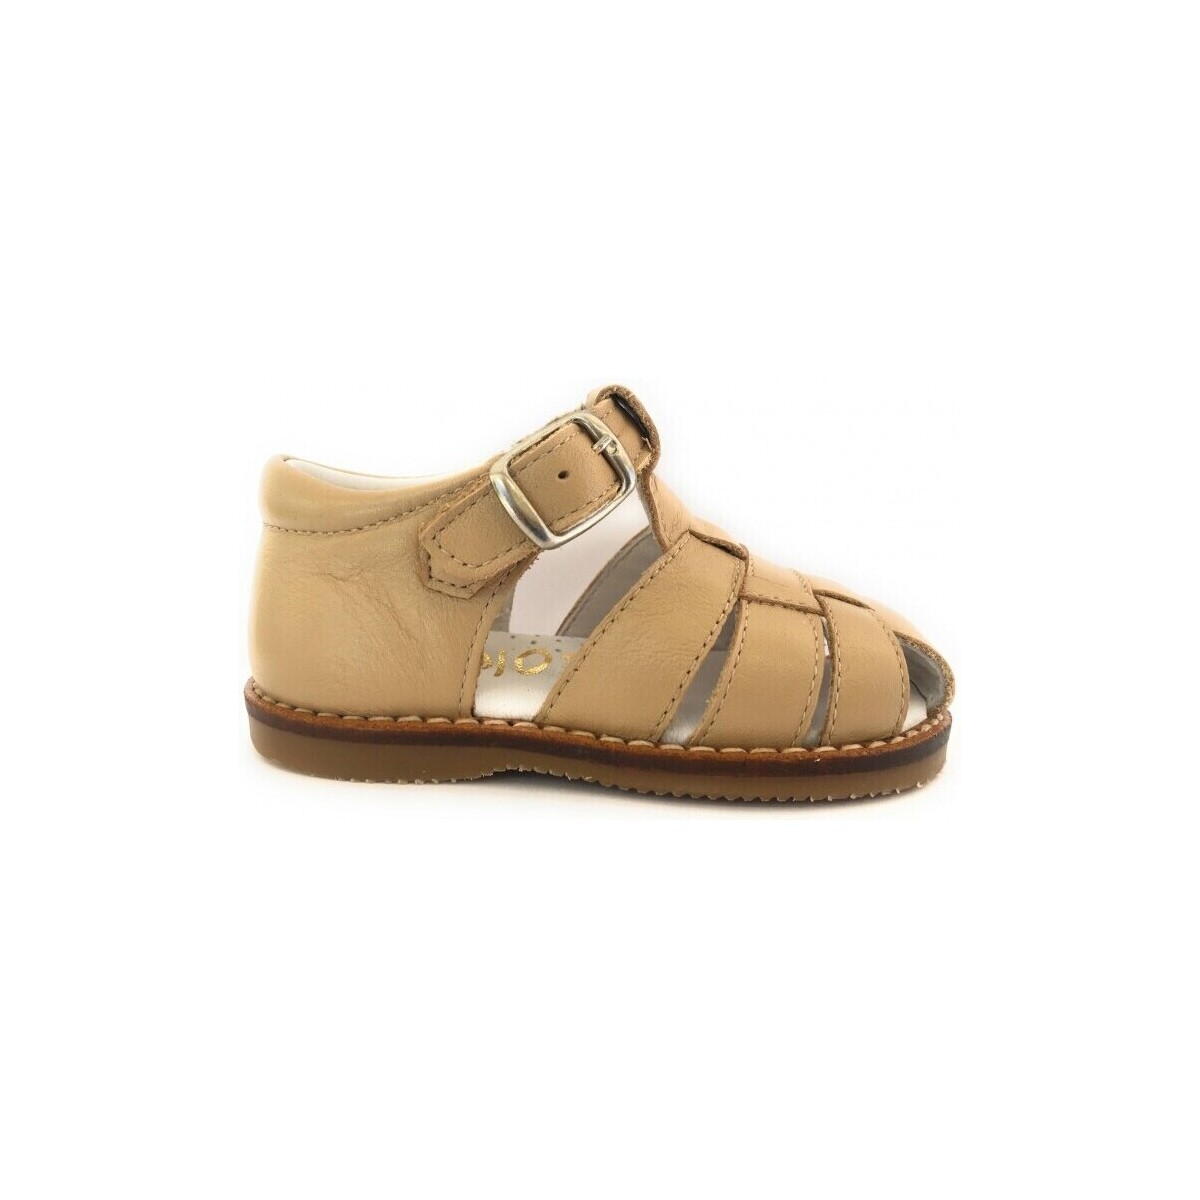 Schoenen Sandalen / Open schoenen Gulliver 25325-18 Brown